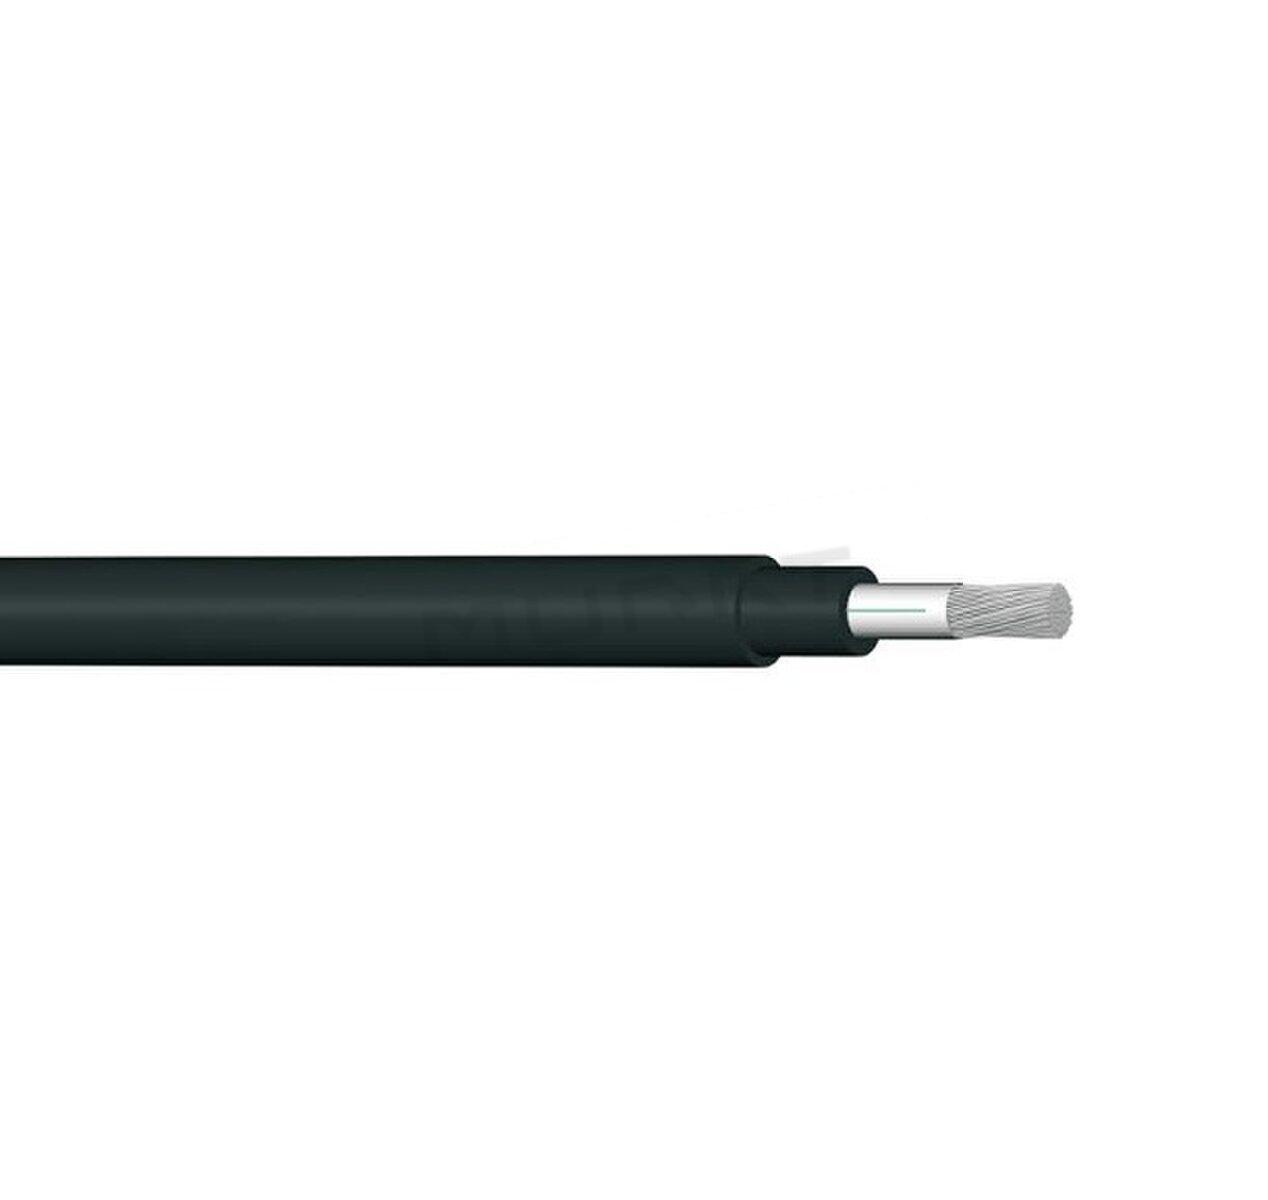 Kábel NSGAFou 1x70 mm2 3,6/6kV